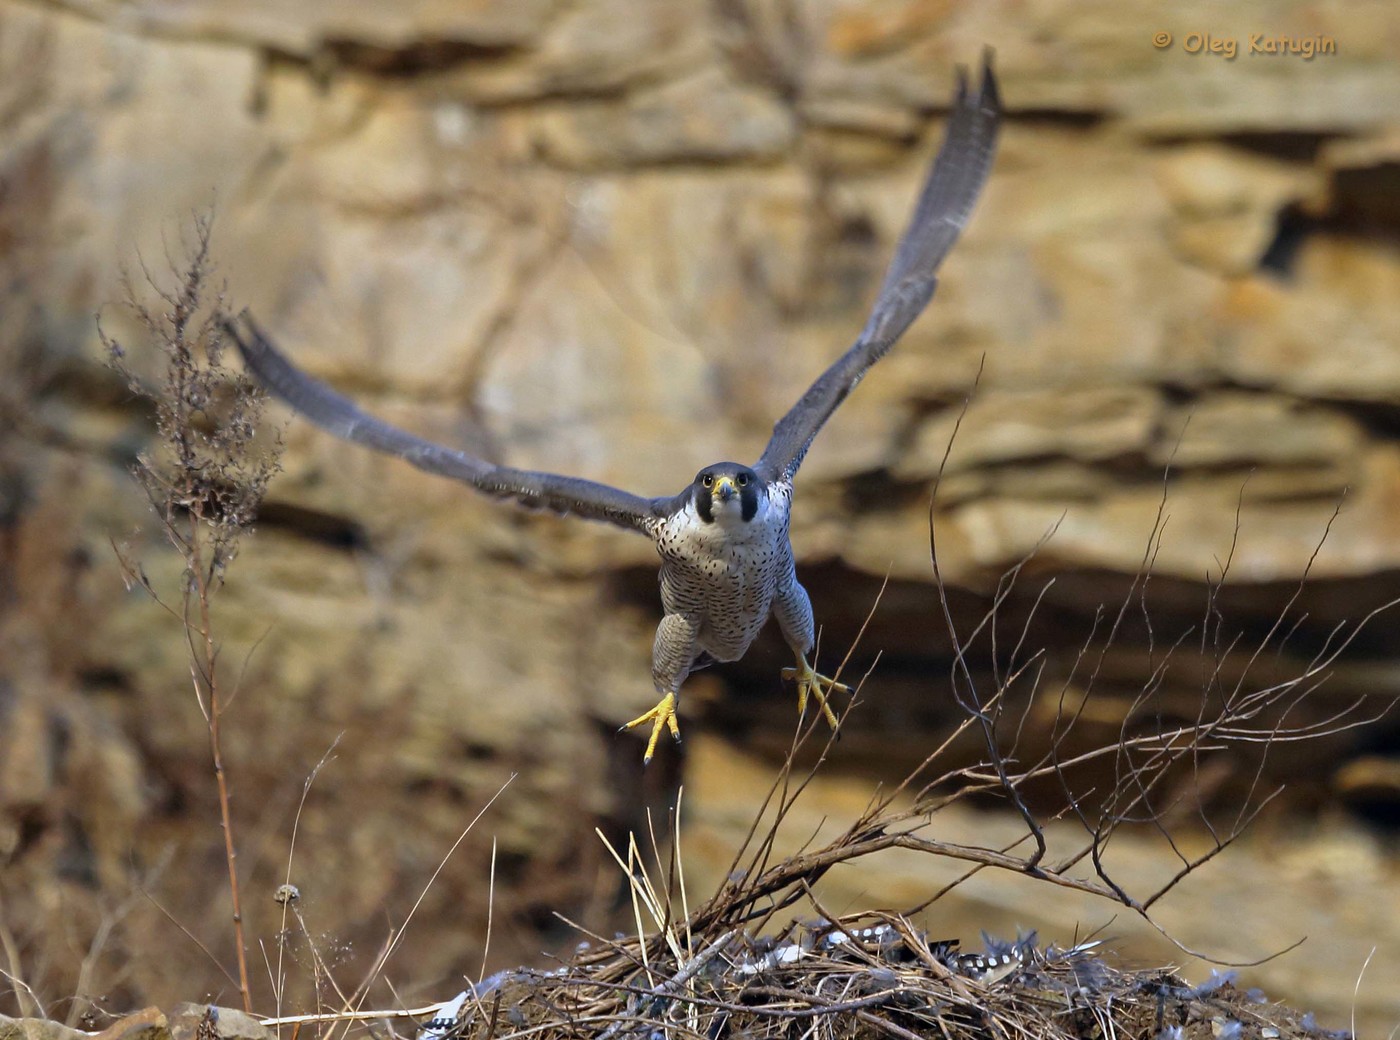 Bird Peregrine Falcon landing on the nest